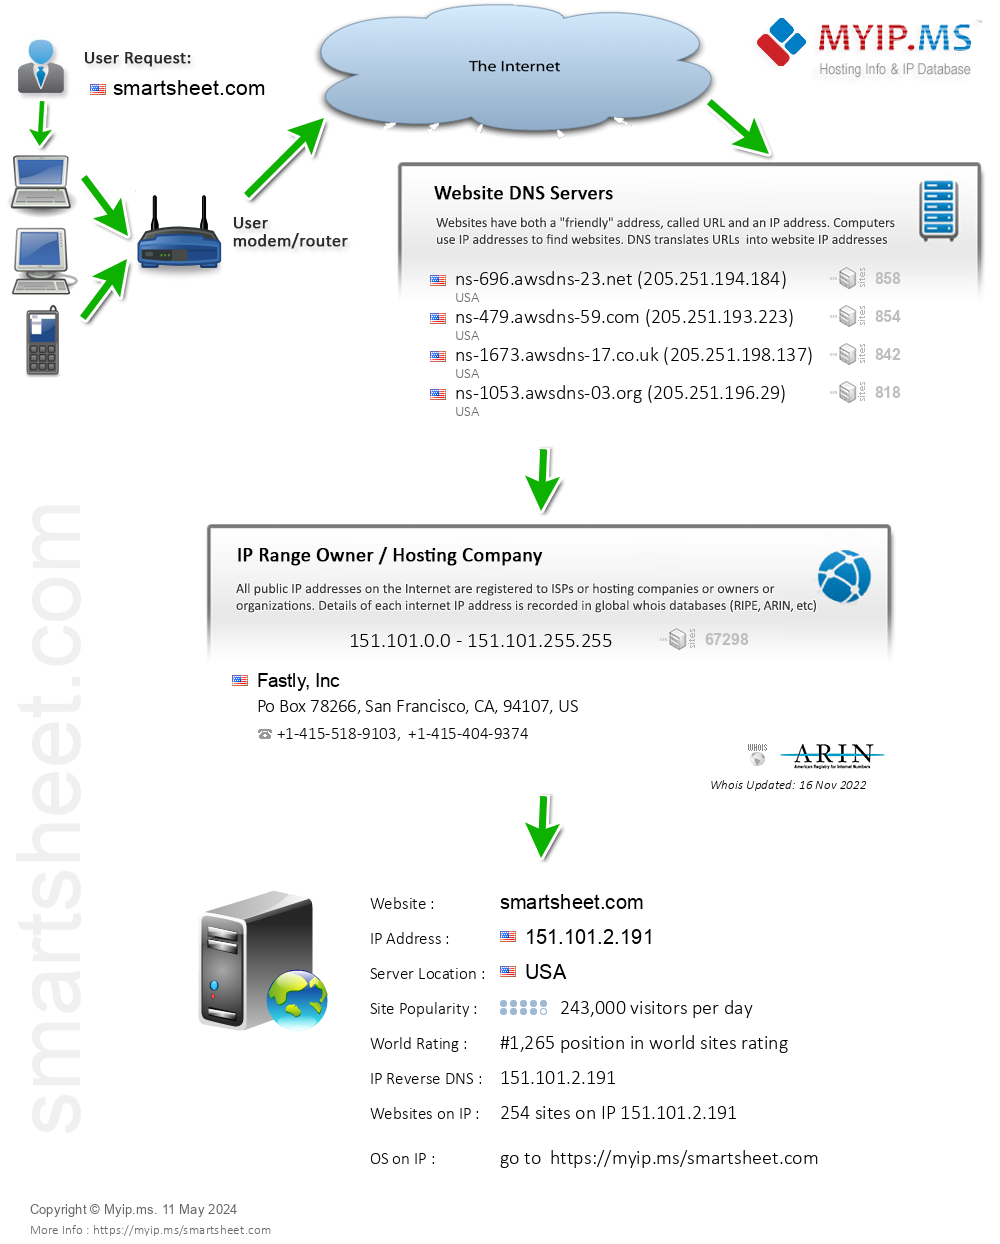 Smartsheet.com - Website Hosting Visual IP Diagram